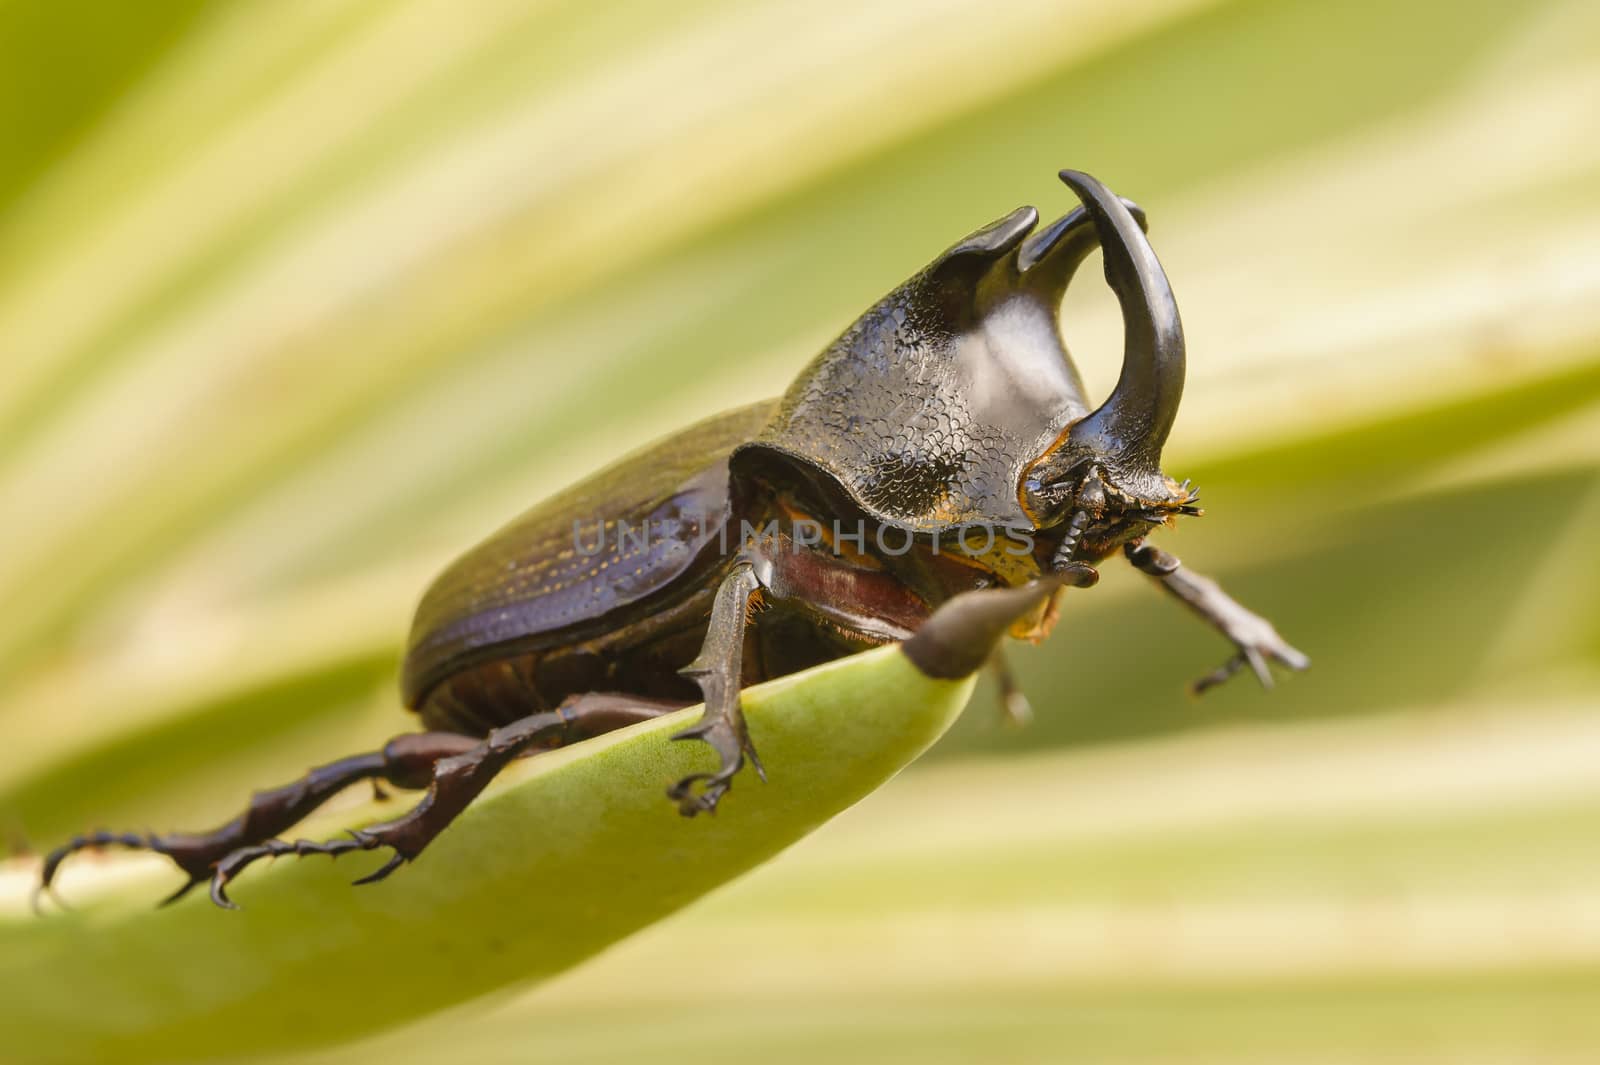 Closeup photograph of a rhinoceros beetle on a leaf.